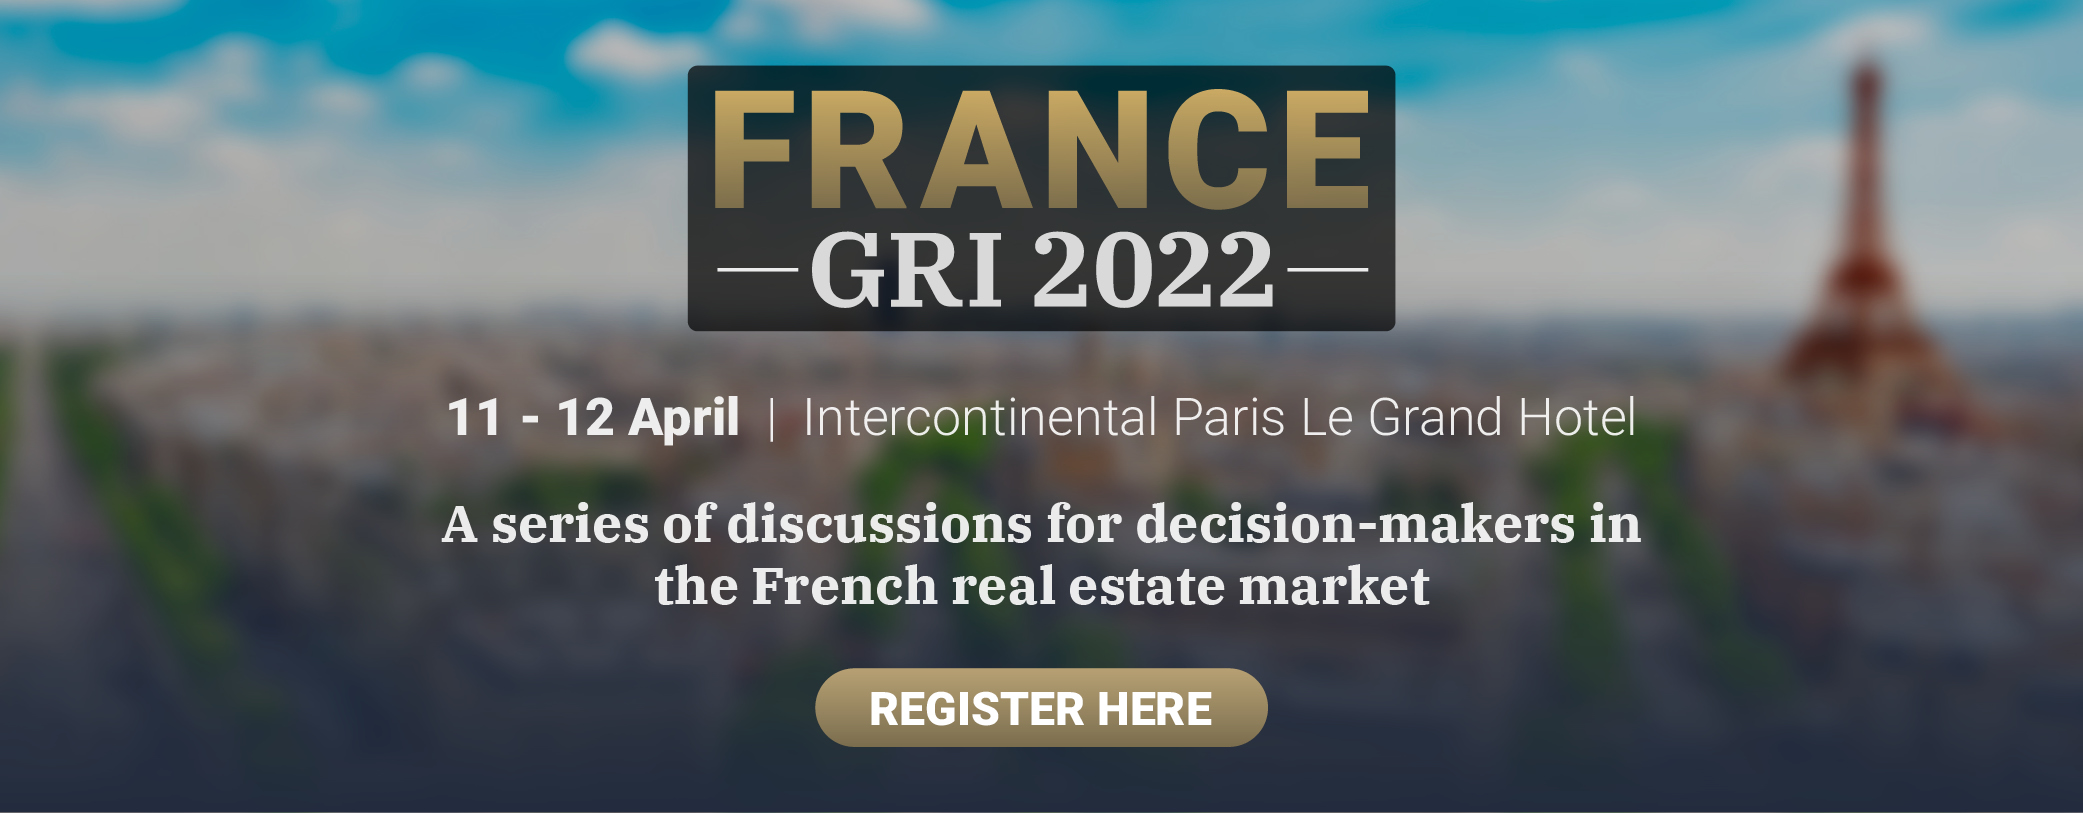 France GRI 2022